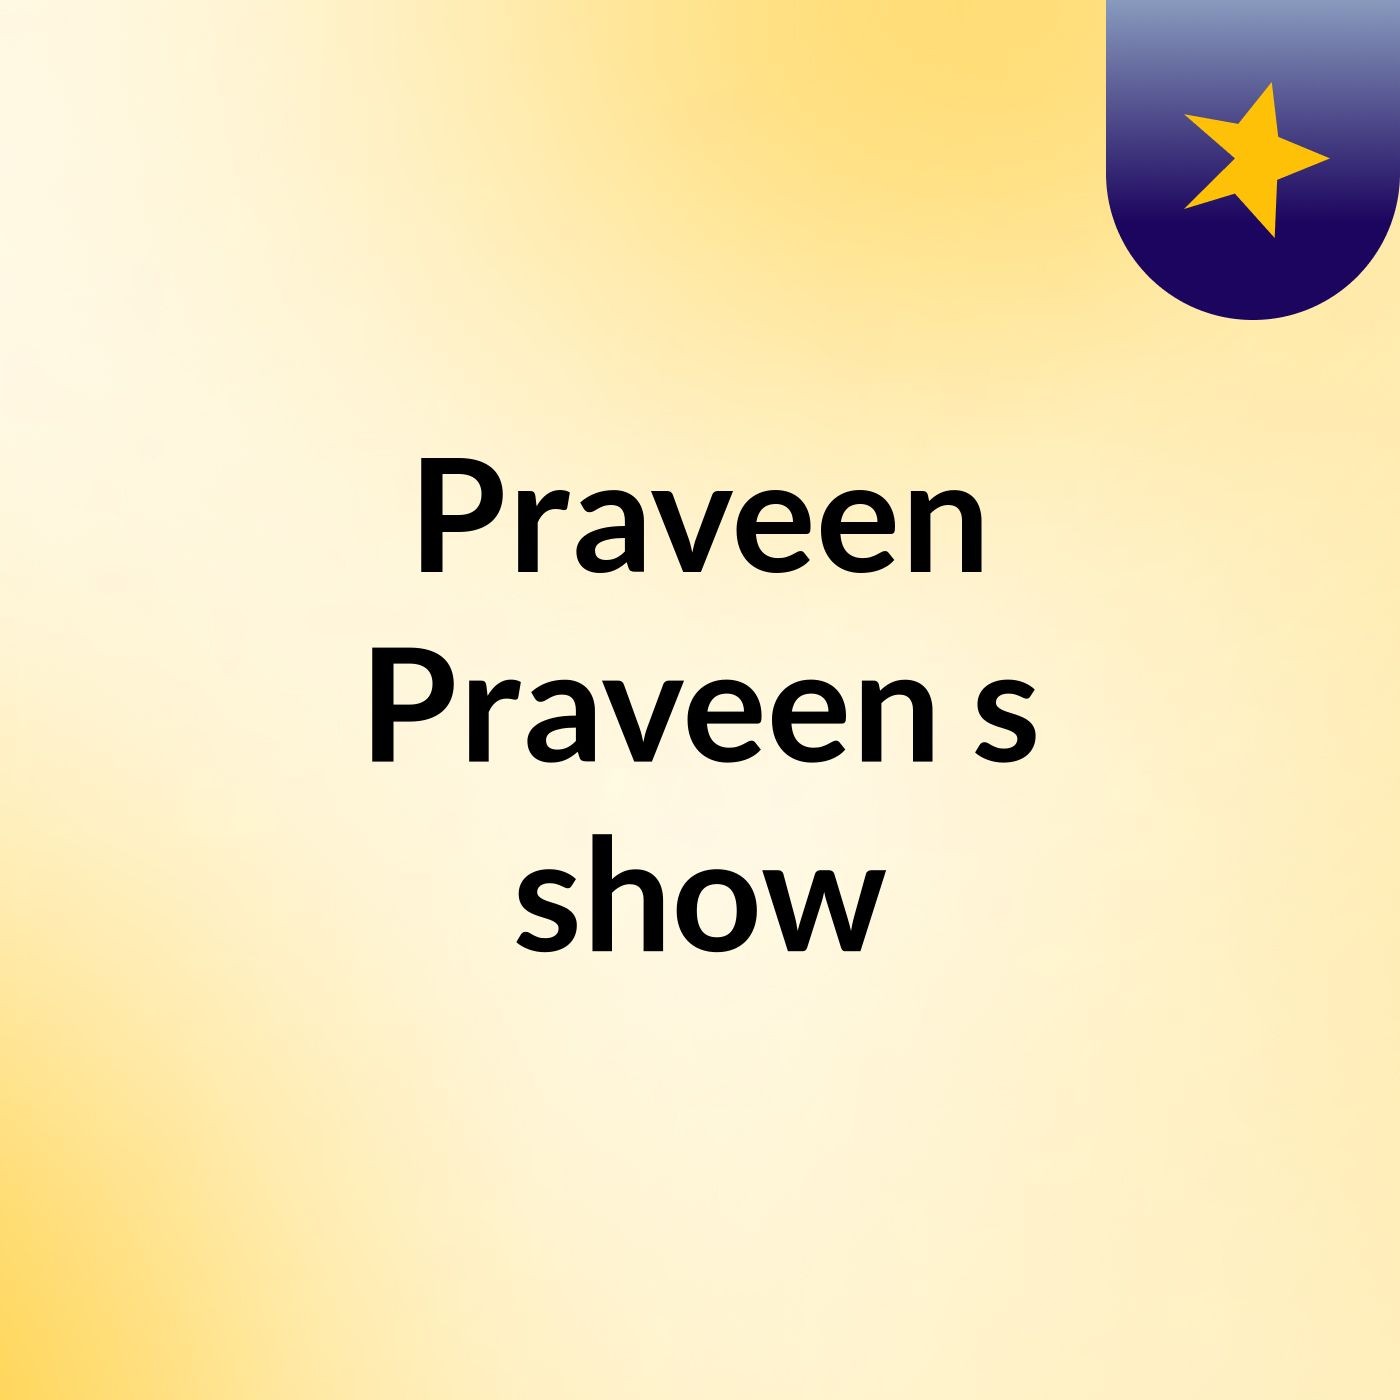 Episode 4 - Praveen Praveen's show